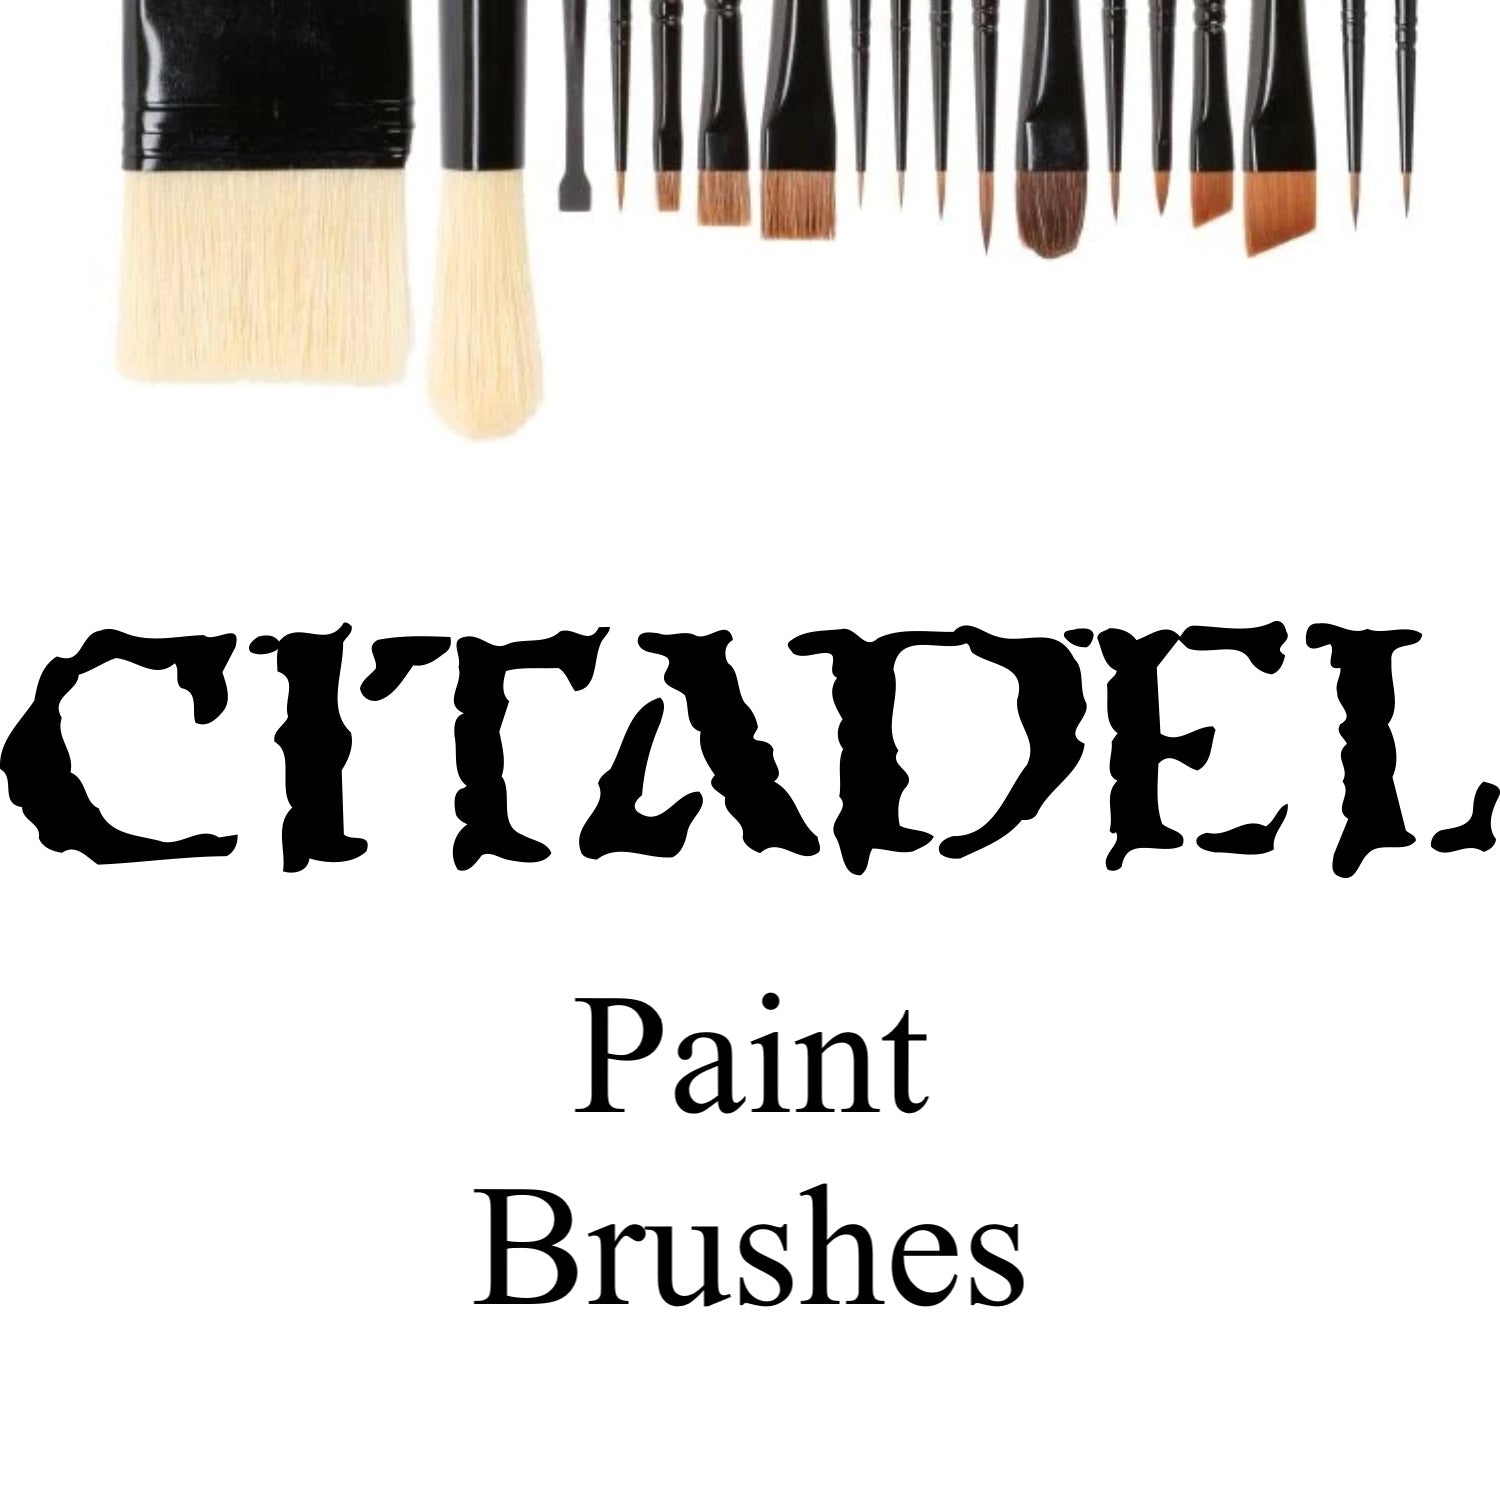 Citadel Paint Brushes